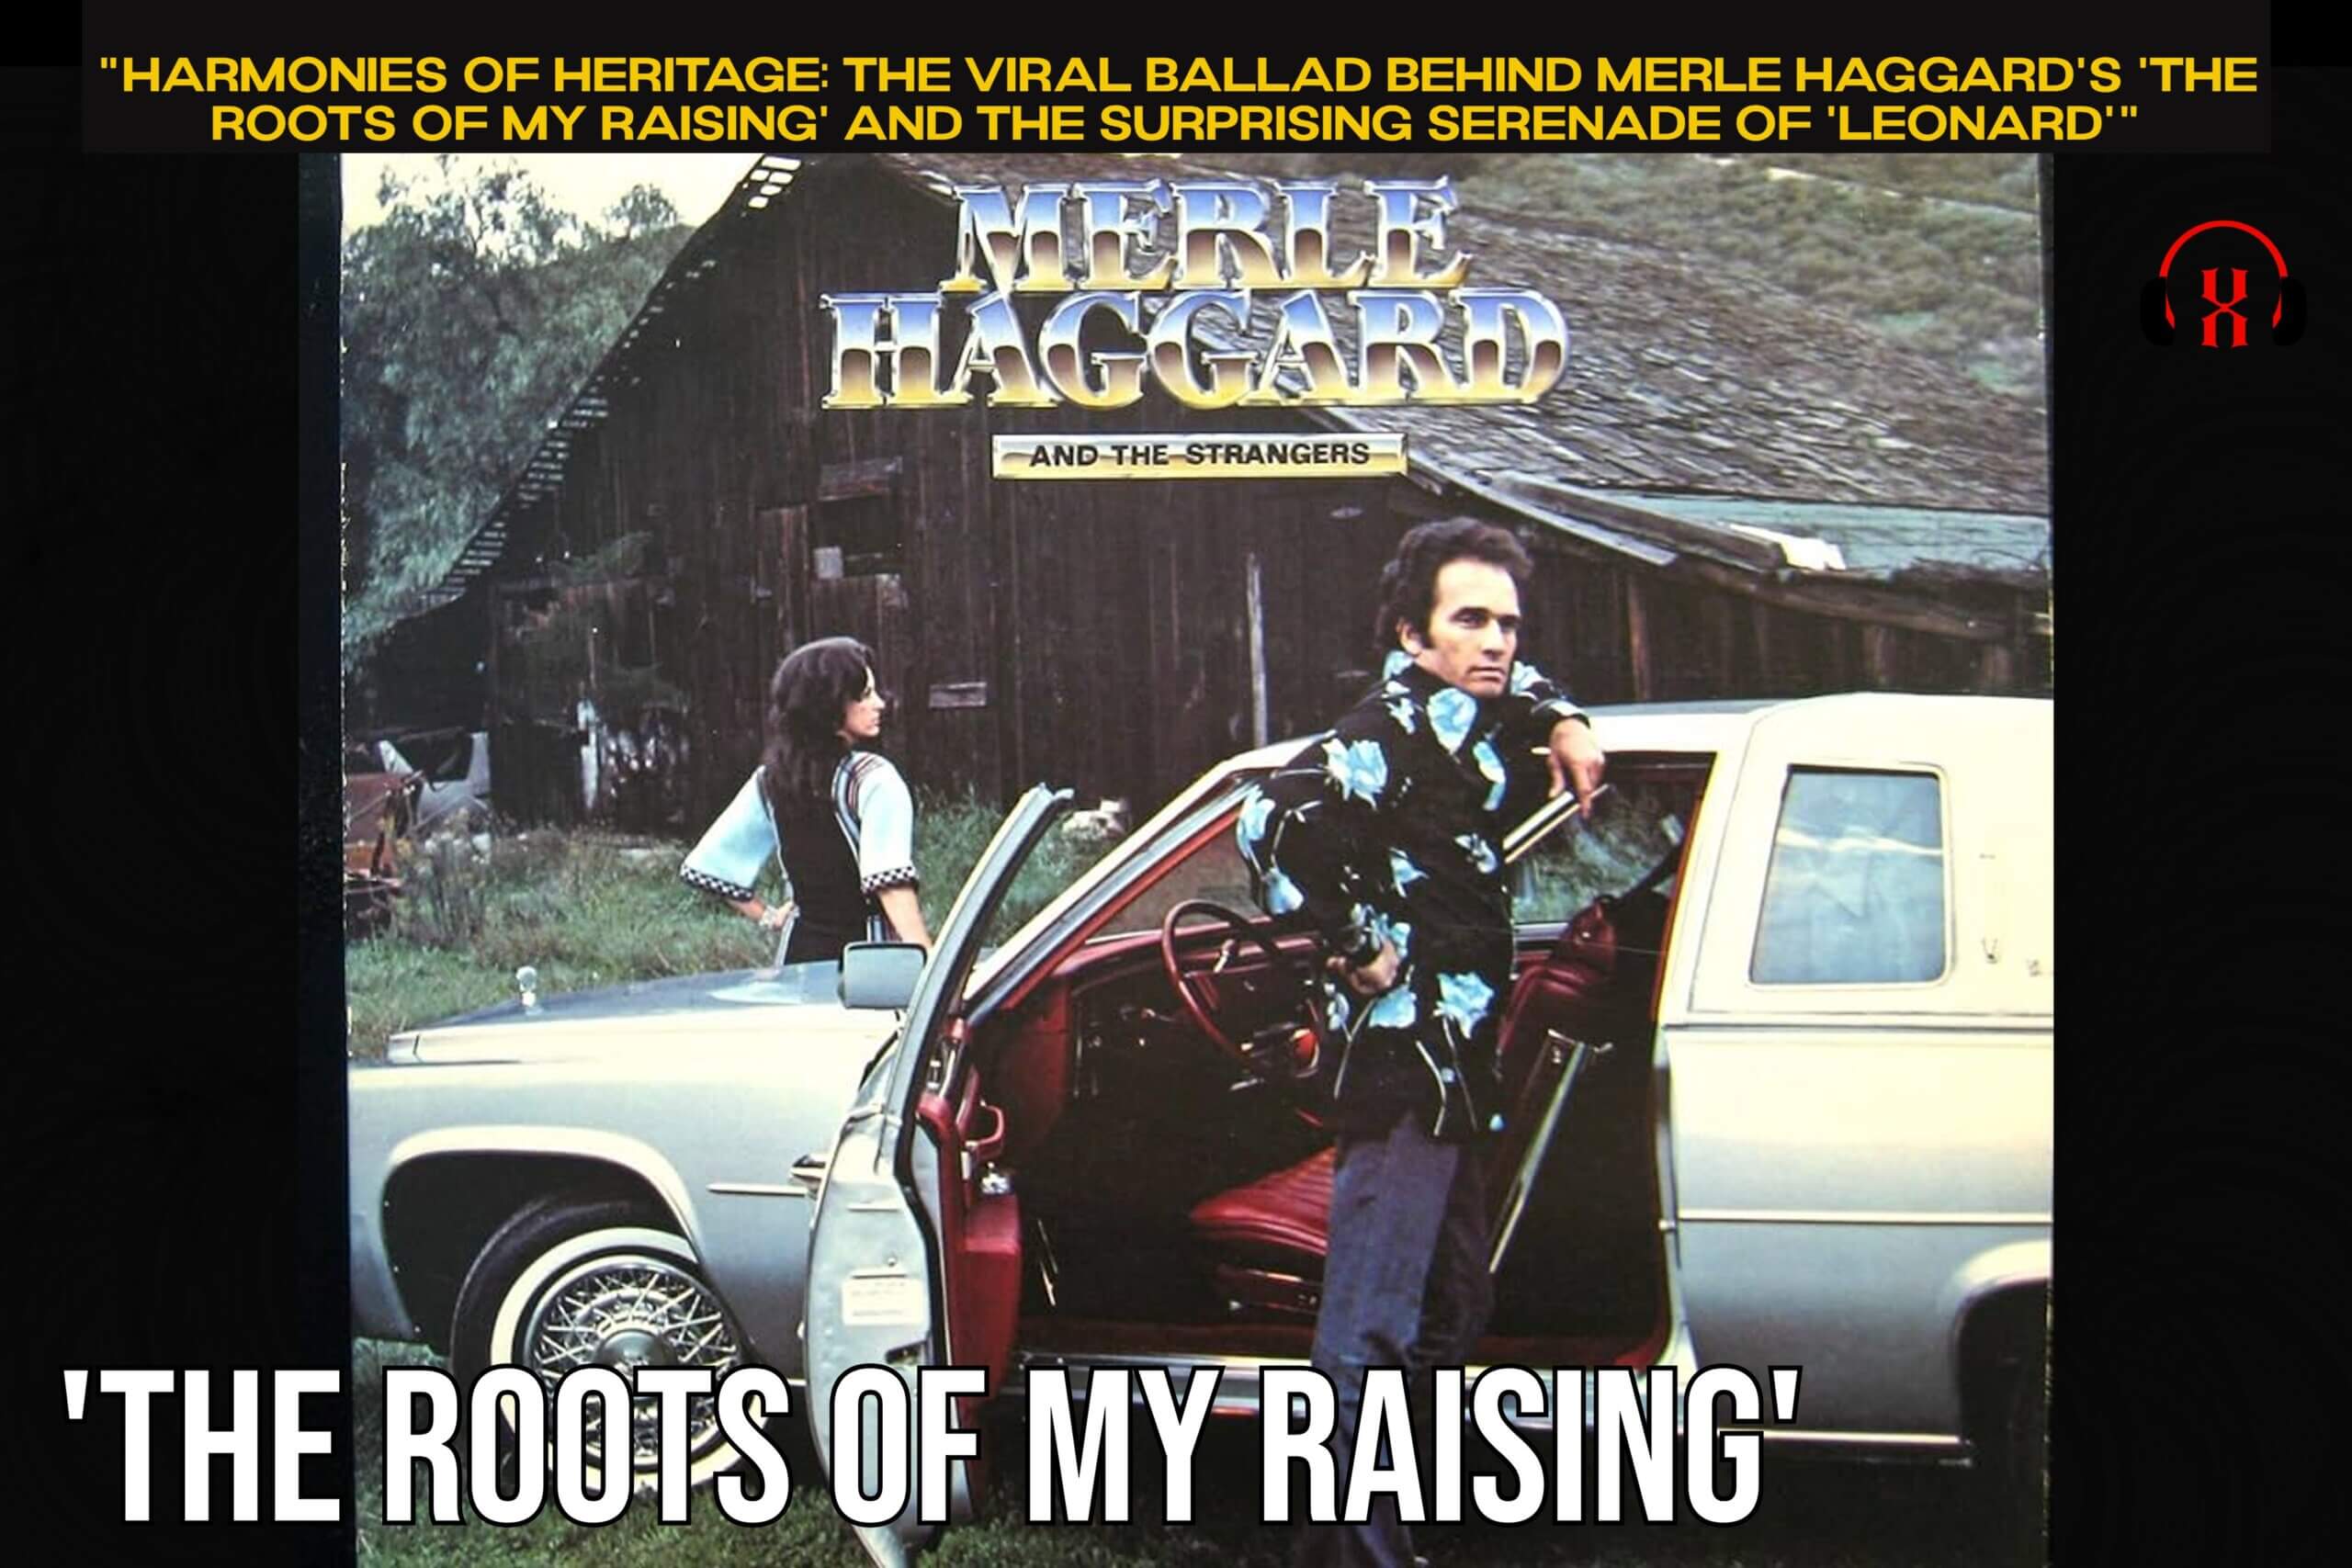 “Harmonies of Heritage: The Viral Ballad Behind Merle Haggard’s ‘The Roots of My Raising’ and the Surprising Serenade of ‘Leonard'”